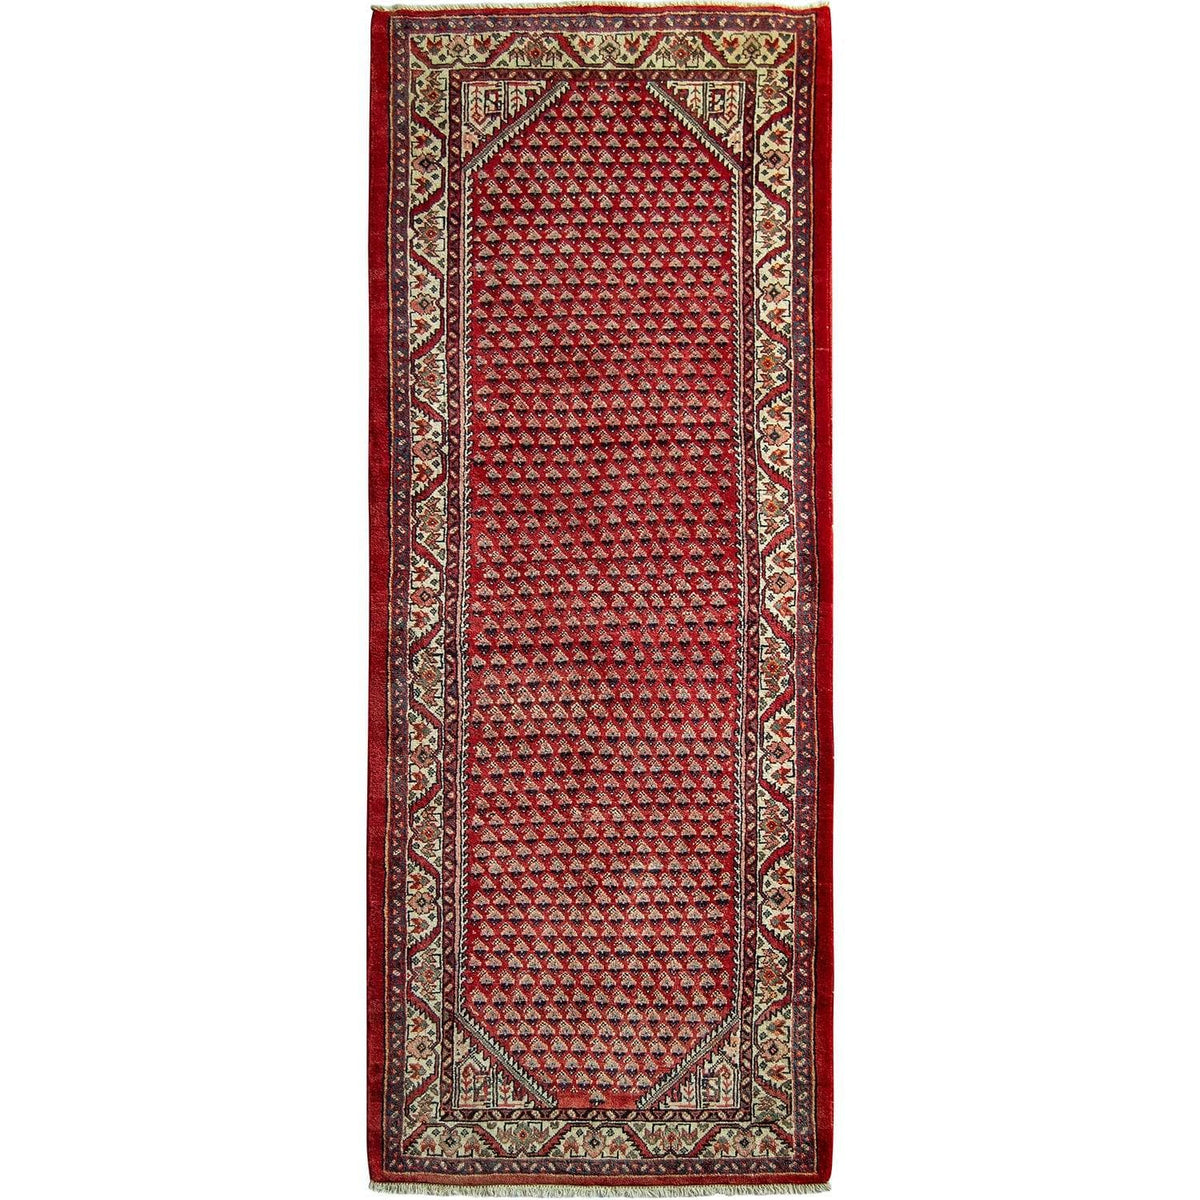 Fine Hand-knotted Wool Persian Red Hamadan Hallway Runner 116cm x 317cm